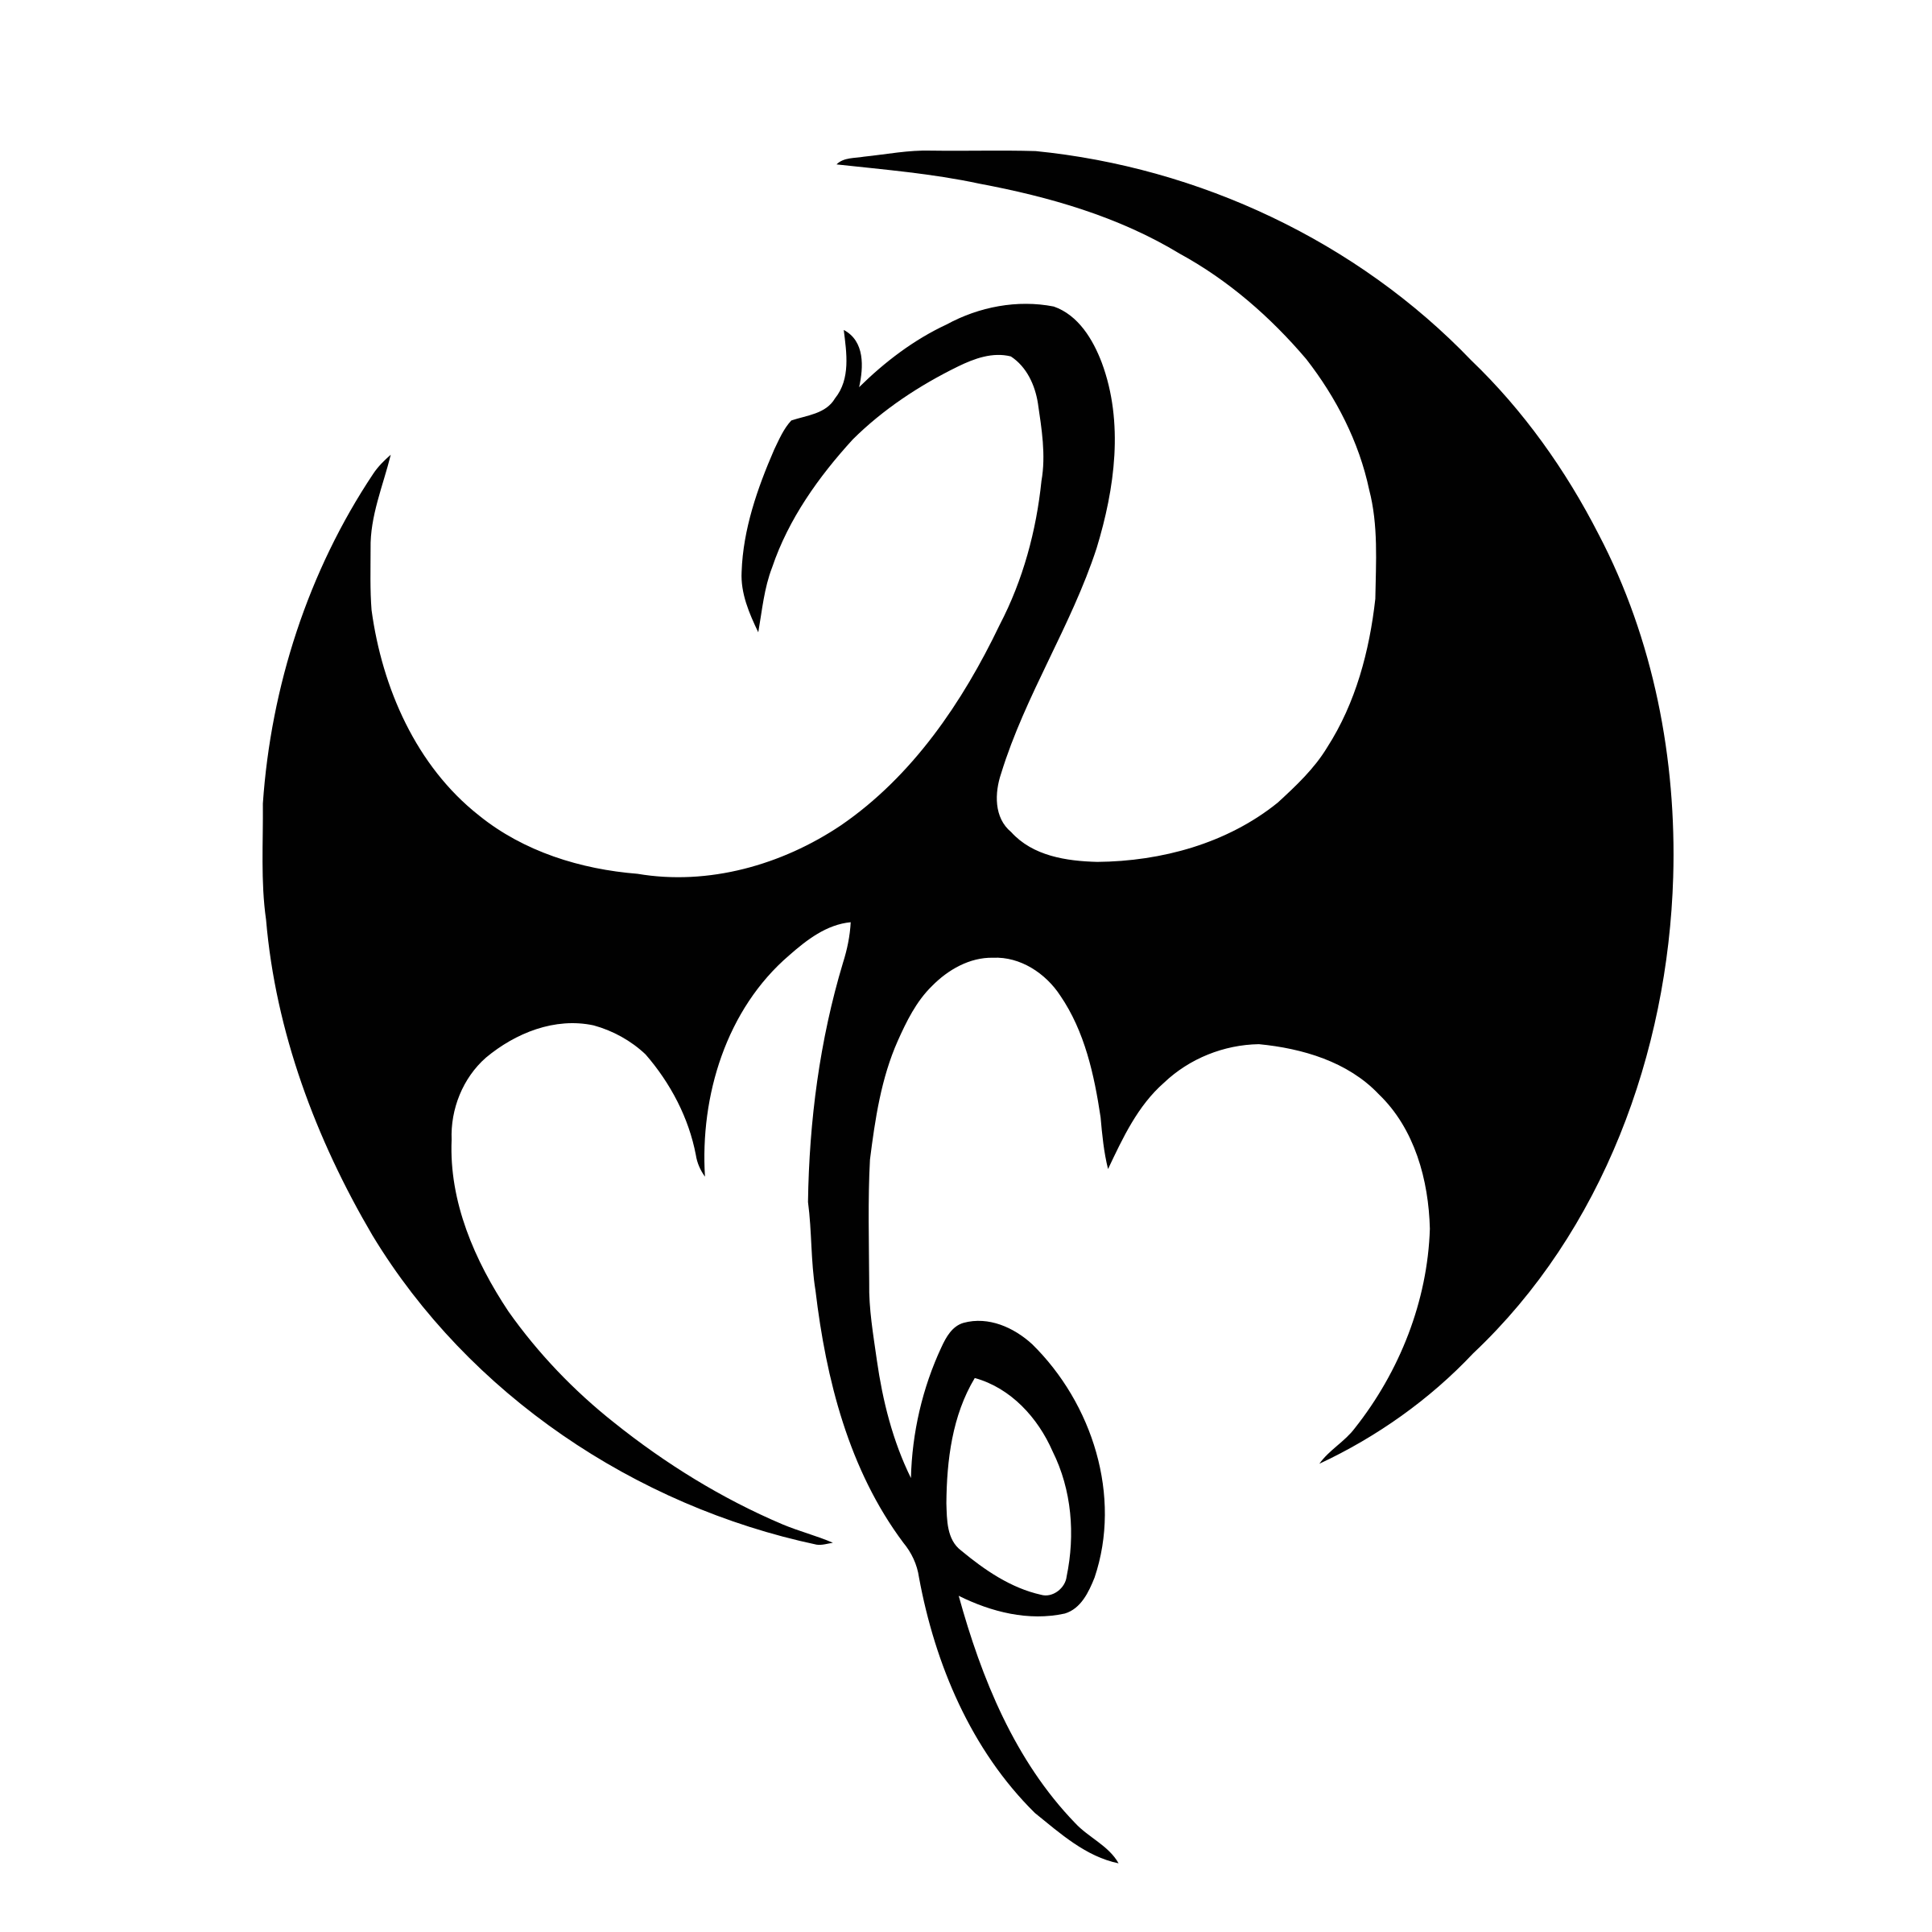 Marvel's Iron Fist Logo PNG Transparent & SVG Vector.